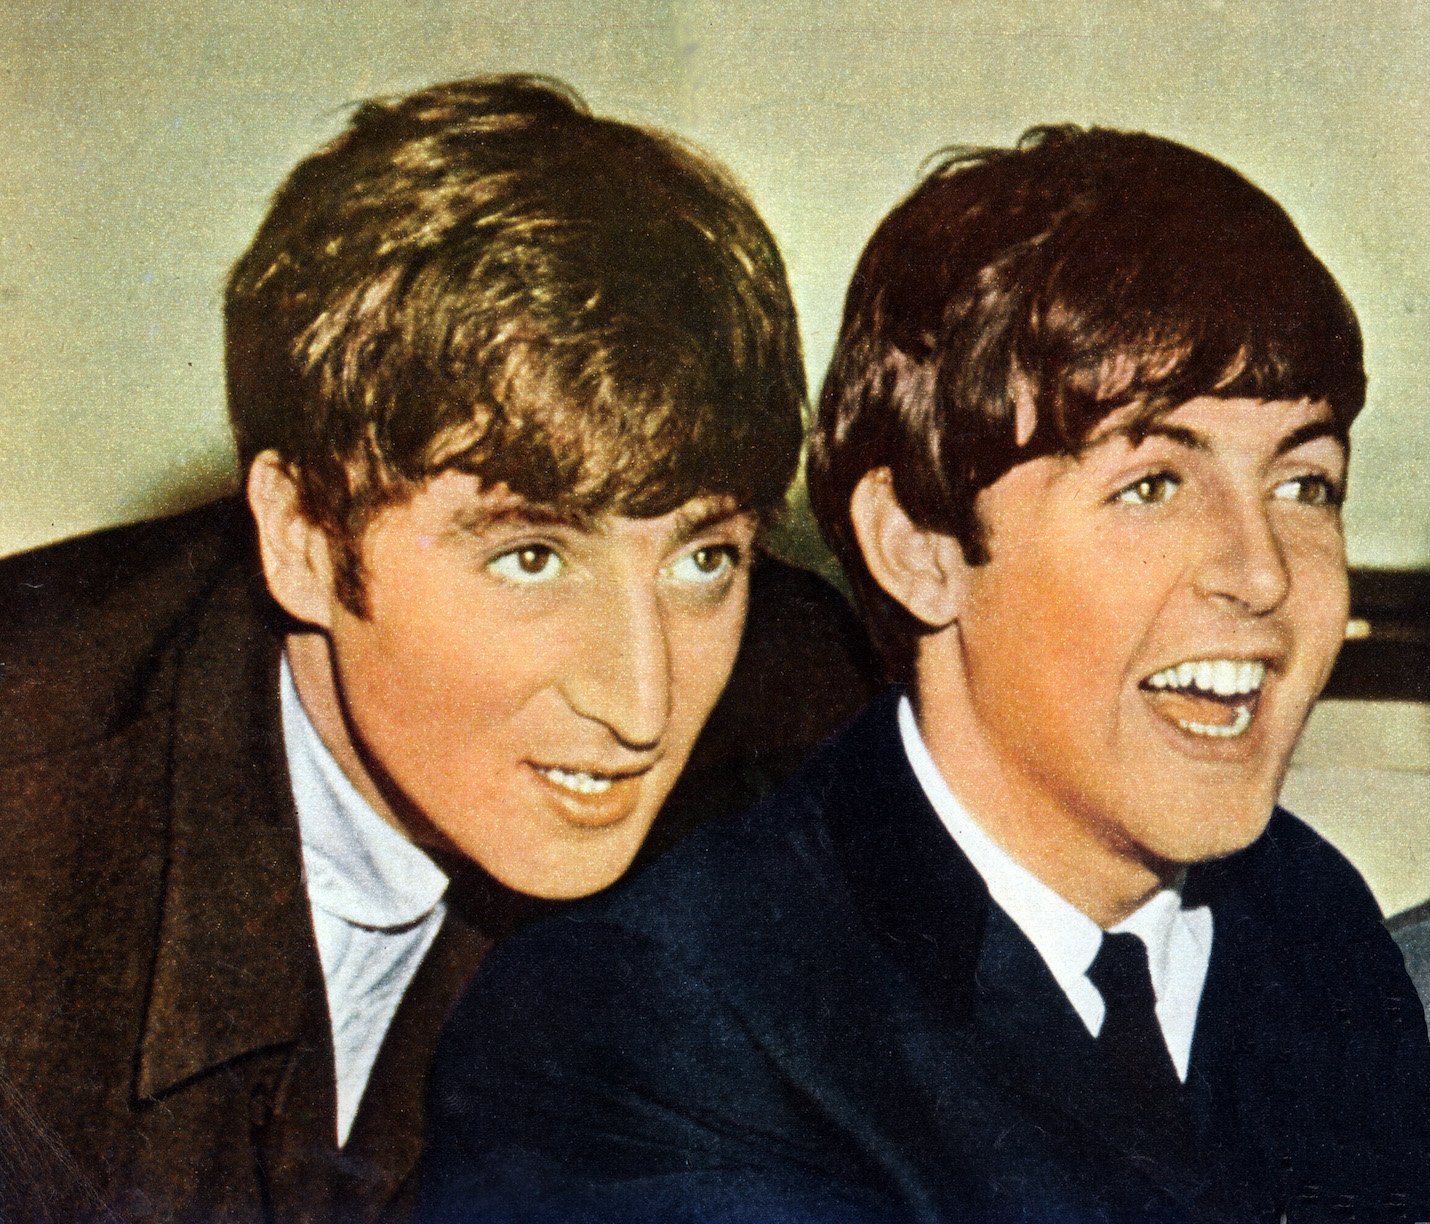 The Song Paul McCartney Played to Impress John Lennon